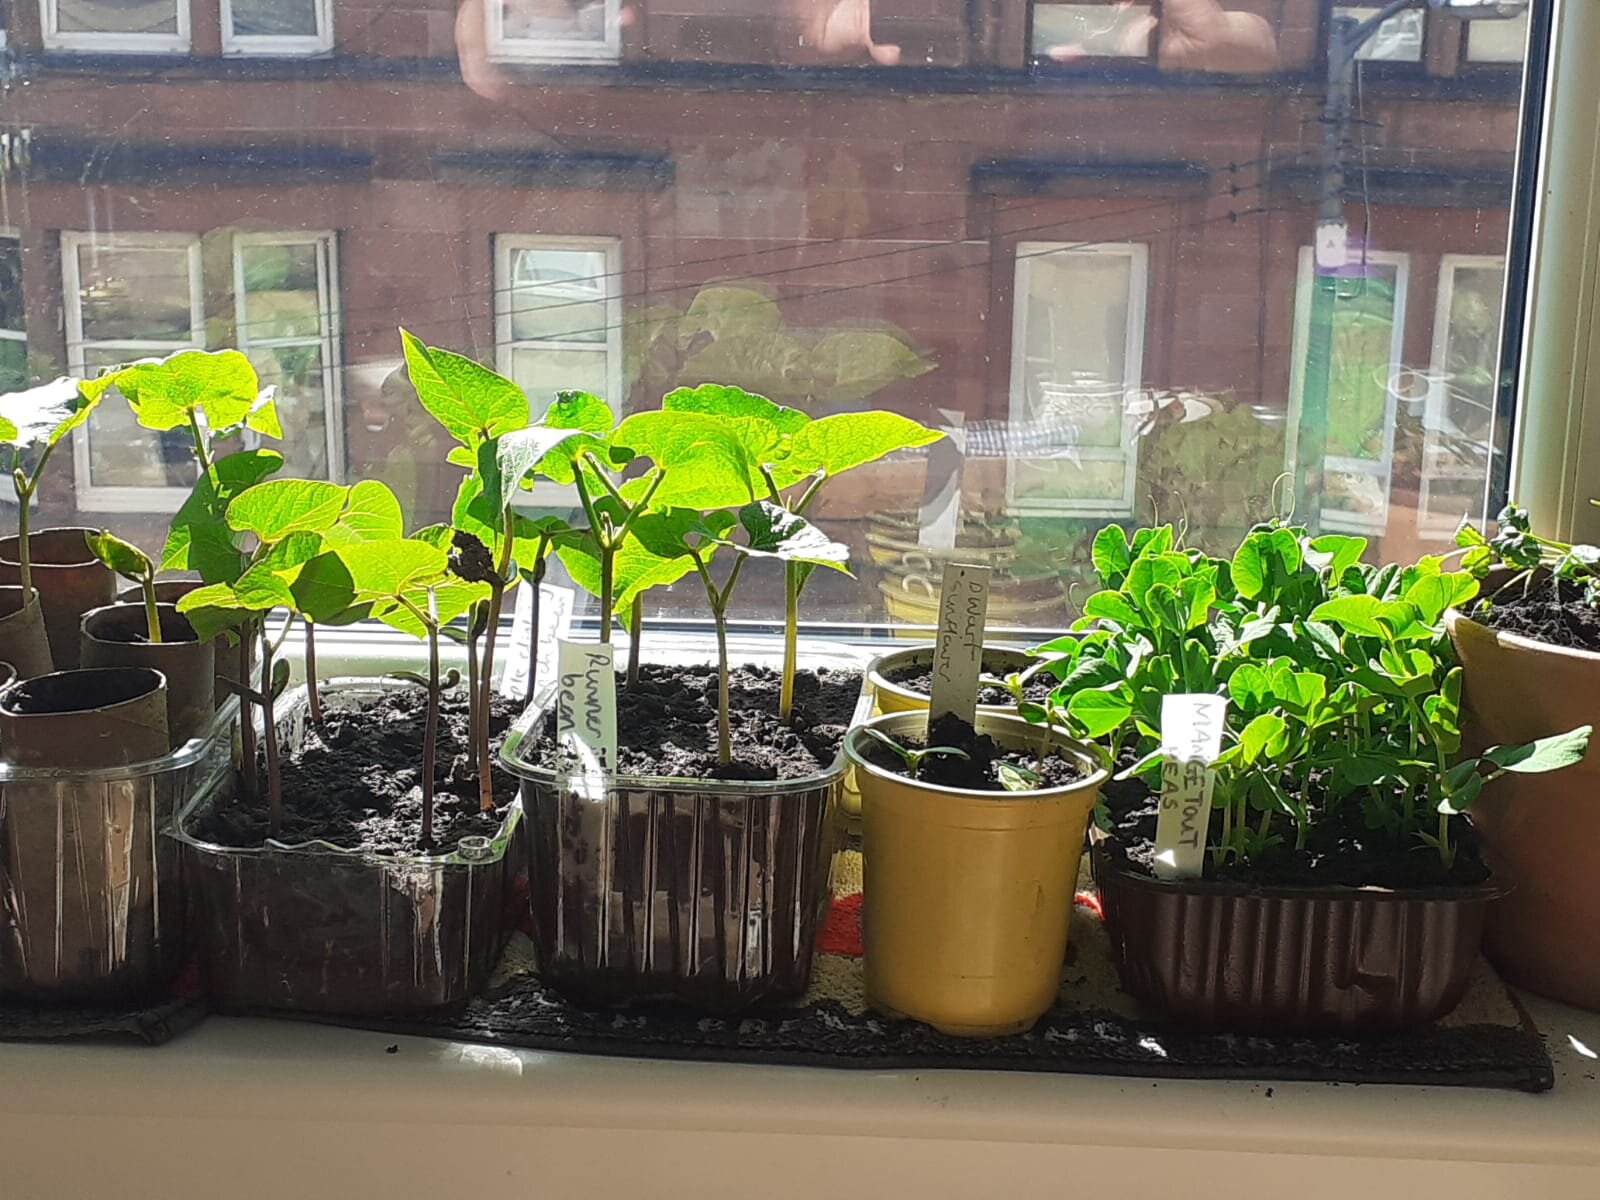 Plants growing windowsill.jpg